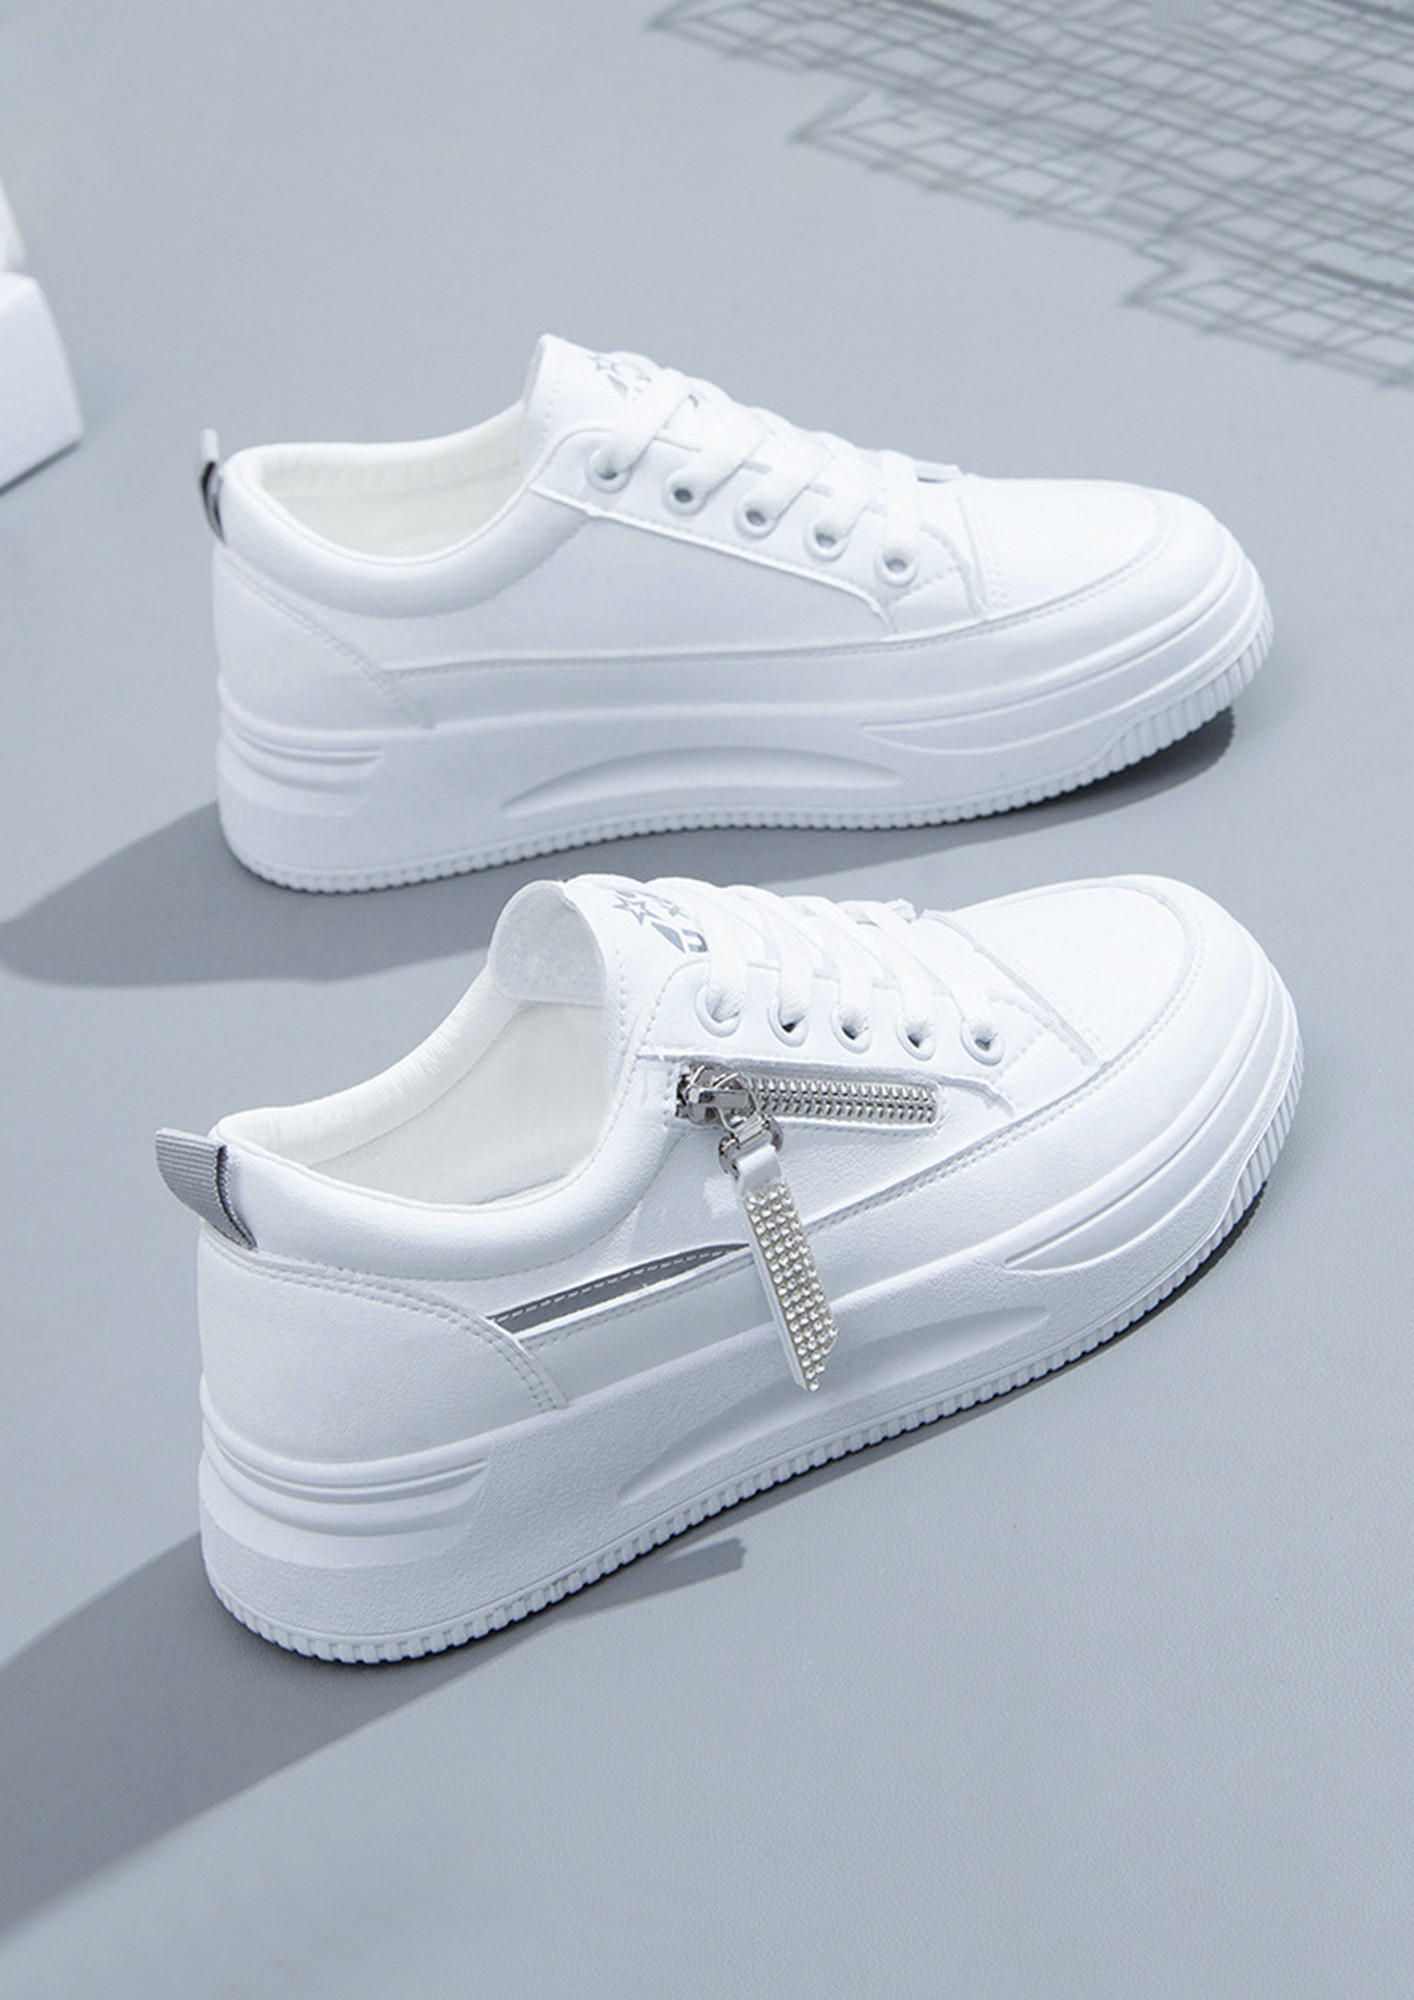  Hurley Women's Lulu Sneakers, Gray/White, 6